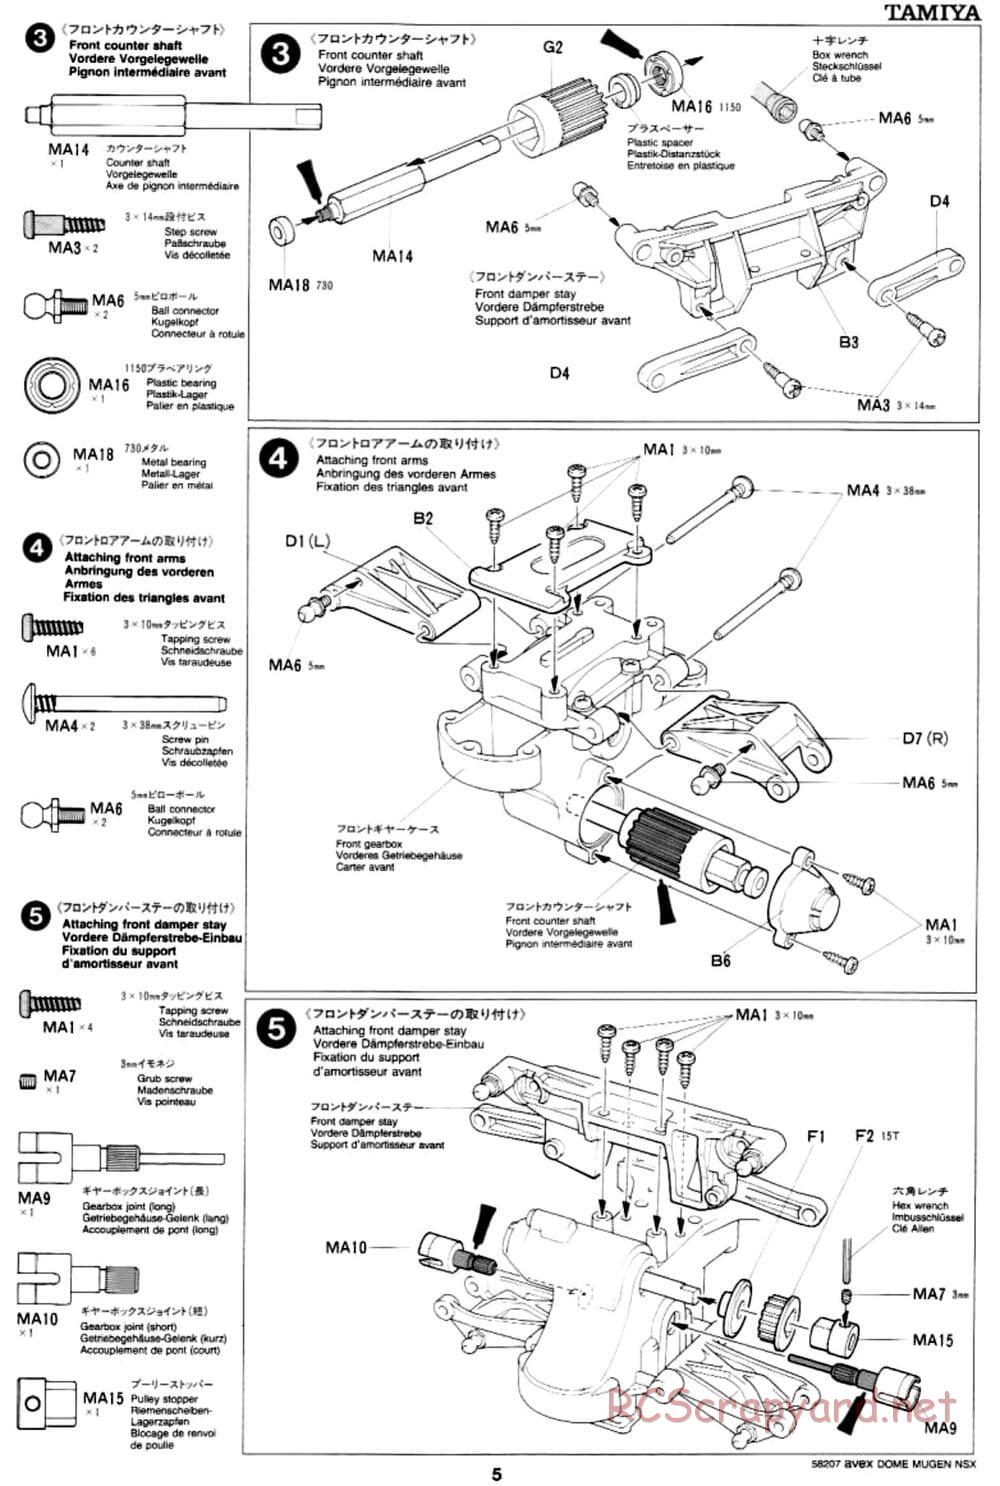 Tamiya - Avex Dome Mugen NSX - TA-03R Chassis - Manual - Page 5